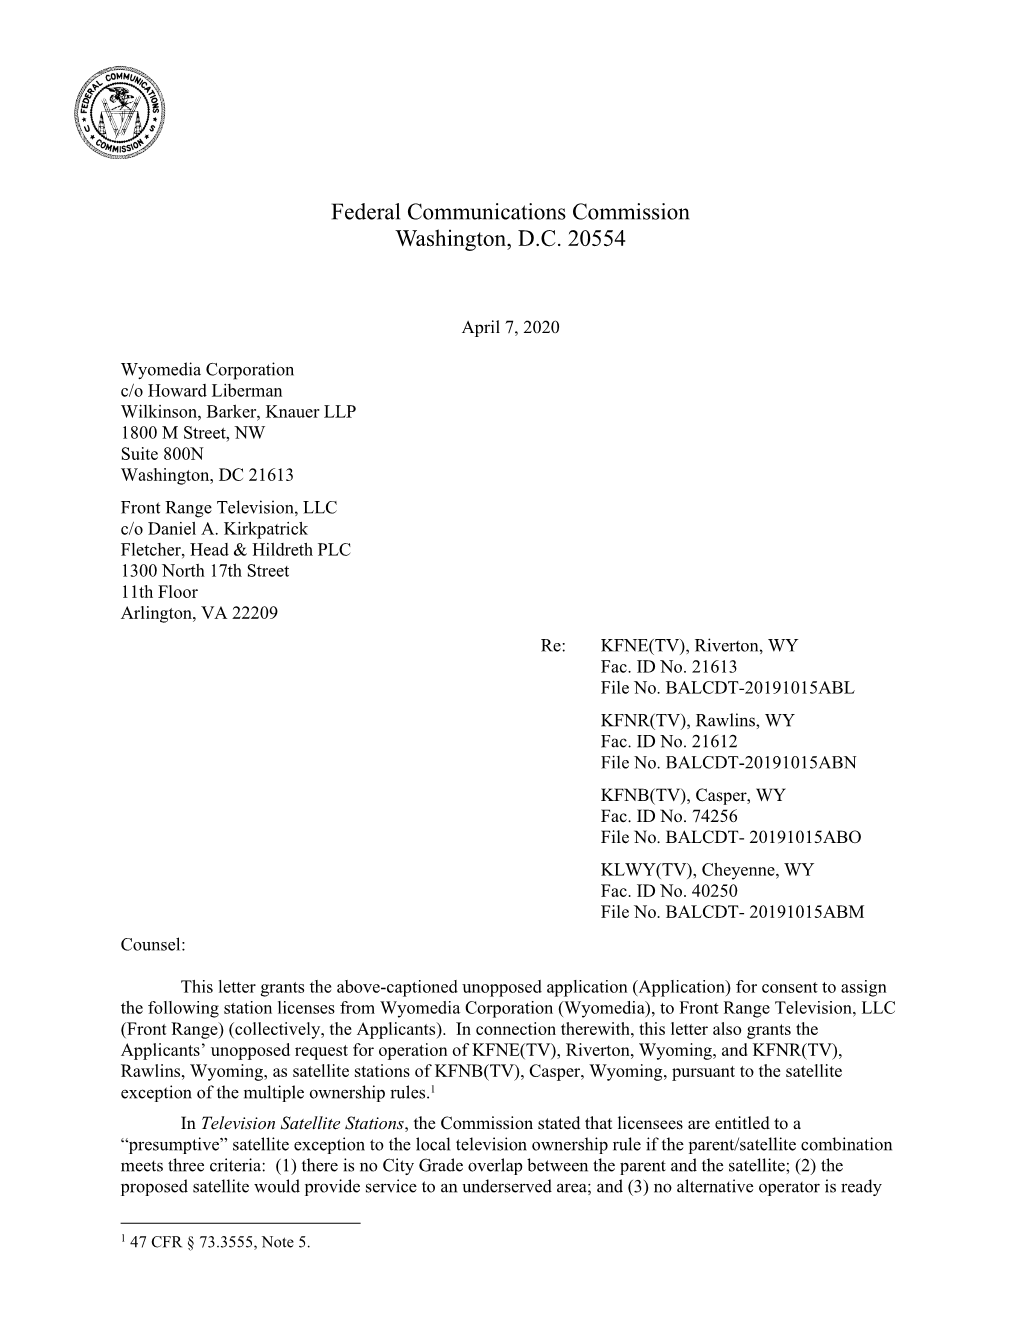 Federal Communications Commission Washington, D.C. 20554